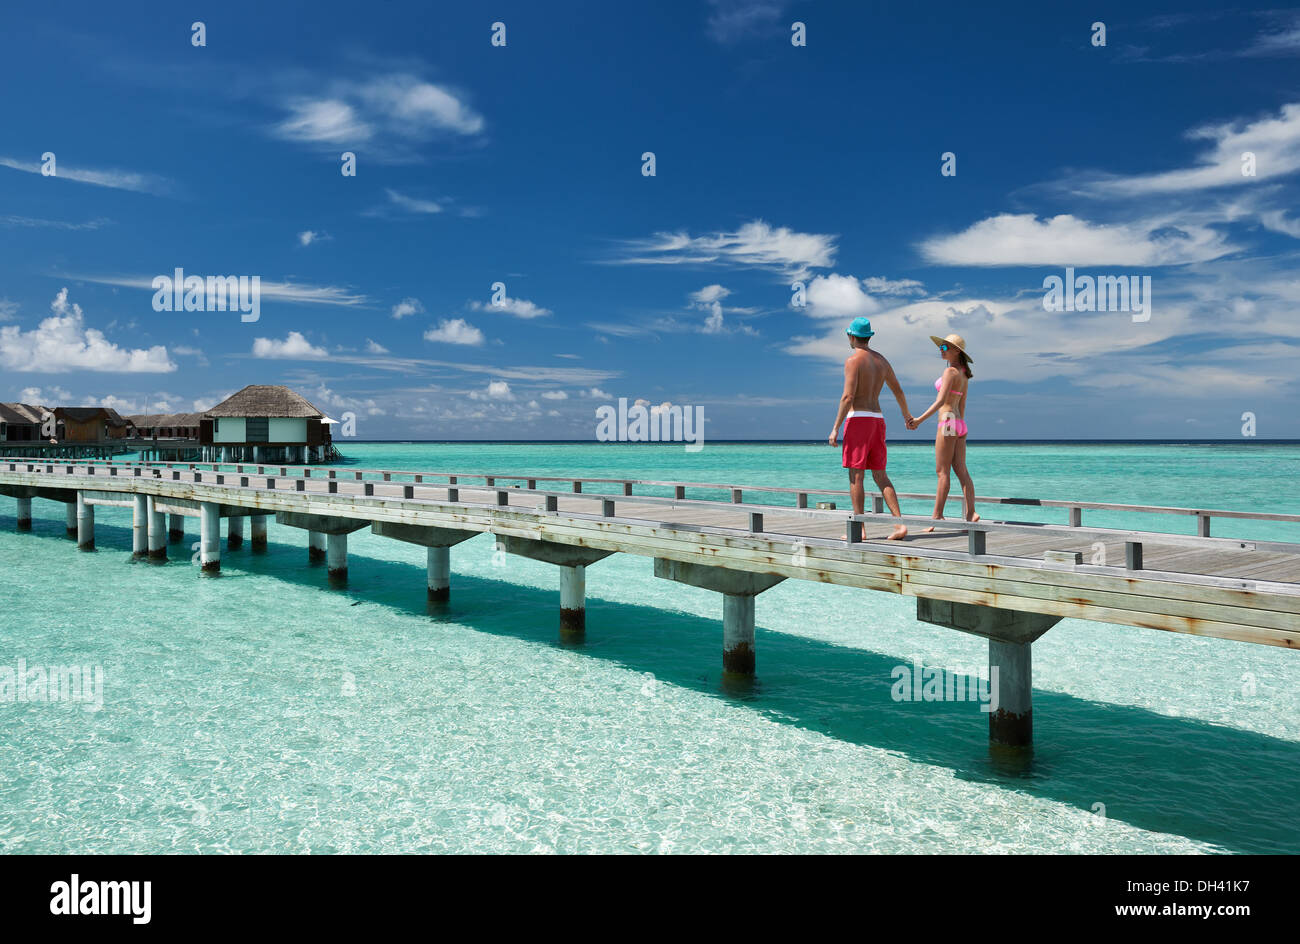 Couple on a beach jetty at Maldives Stock Photo